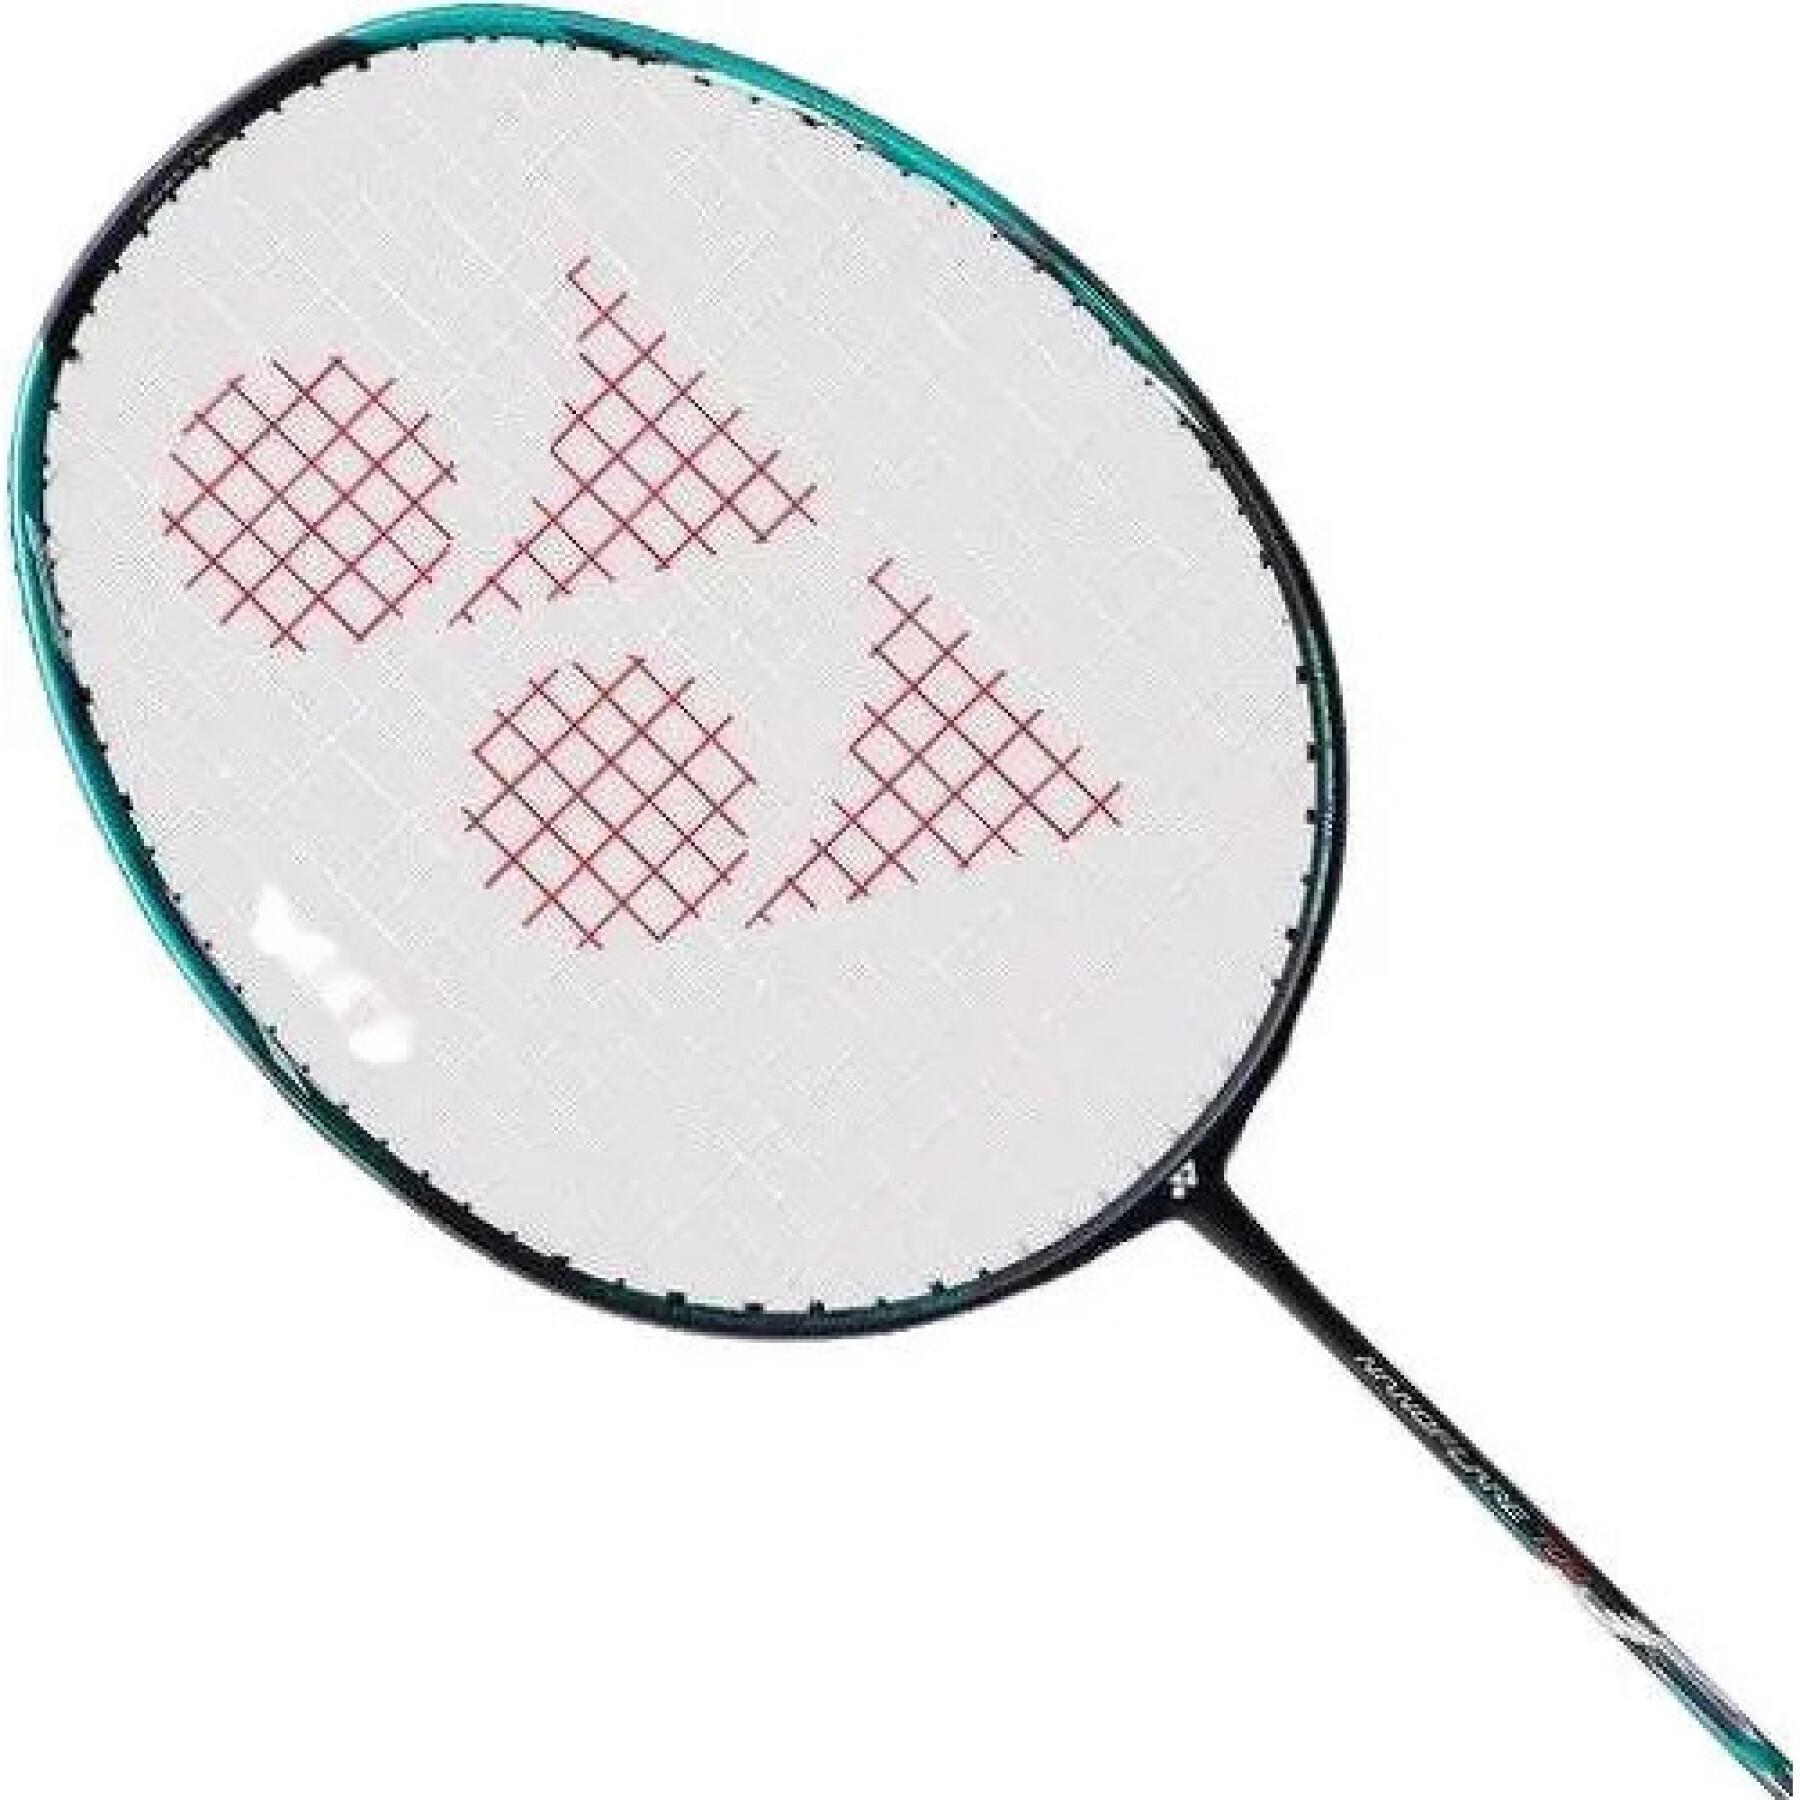 Unstrung racket Yonex nanoflare 700 4u4